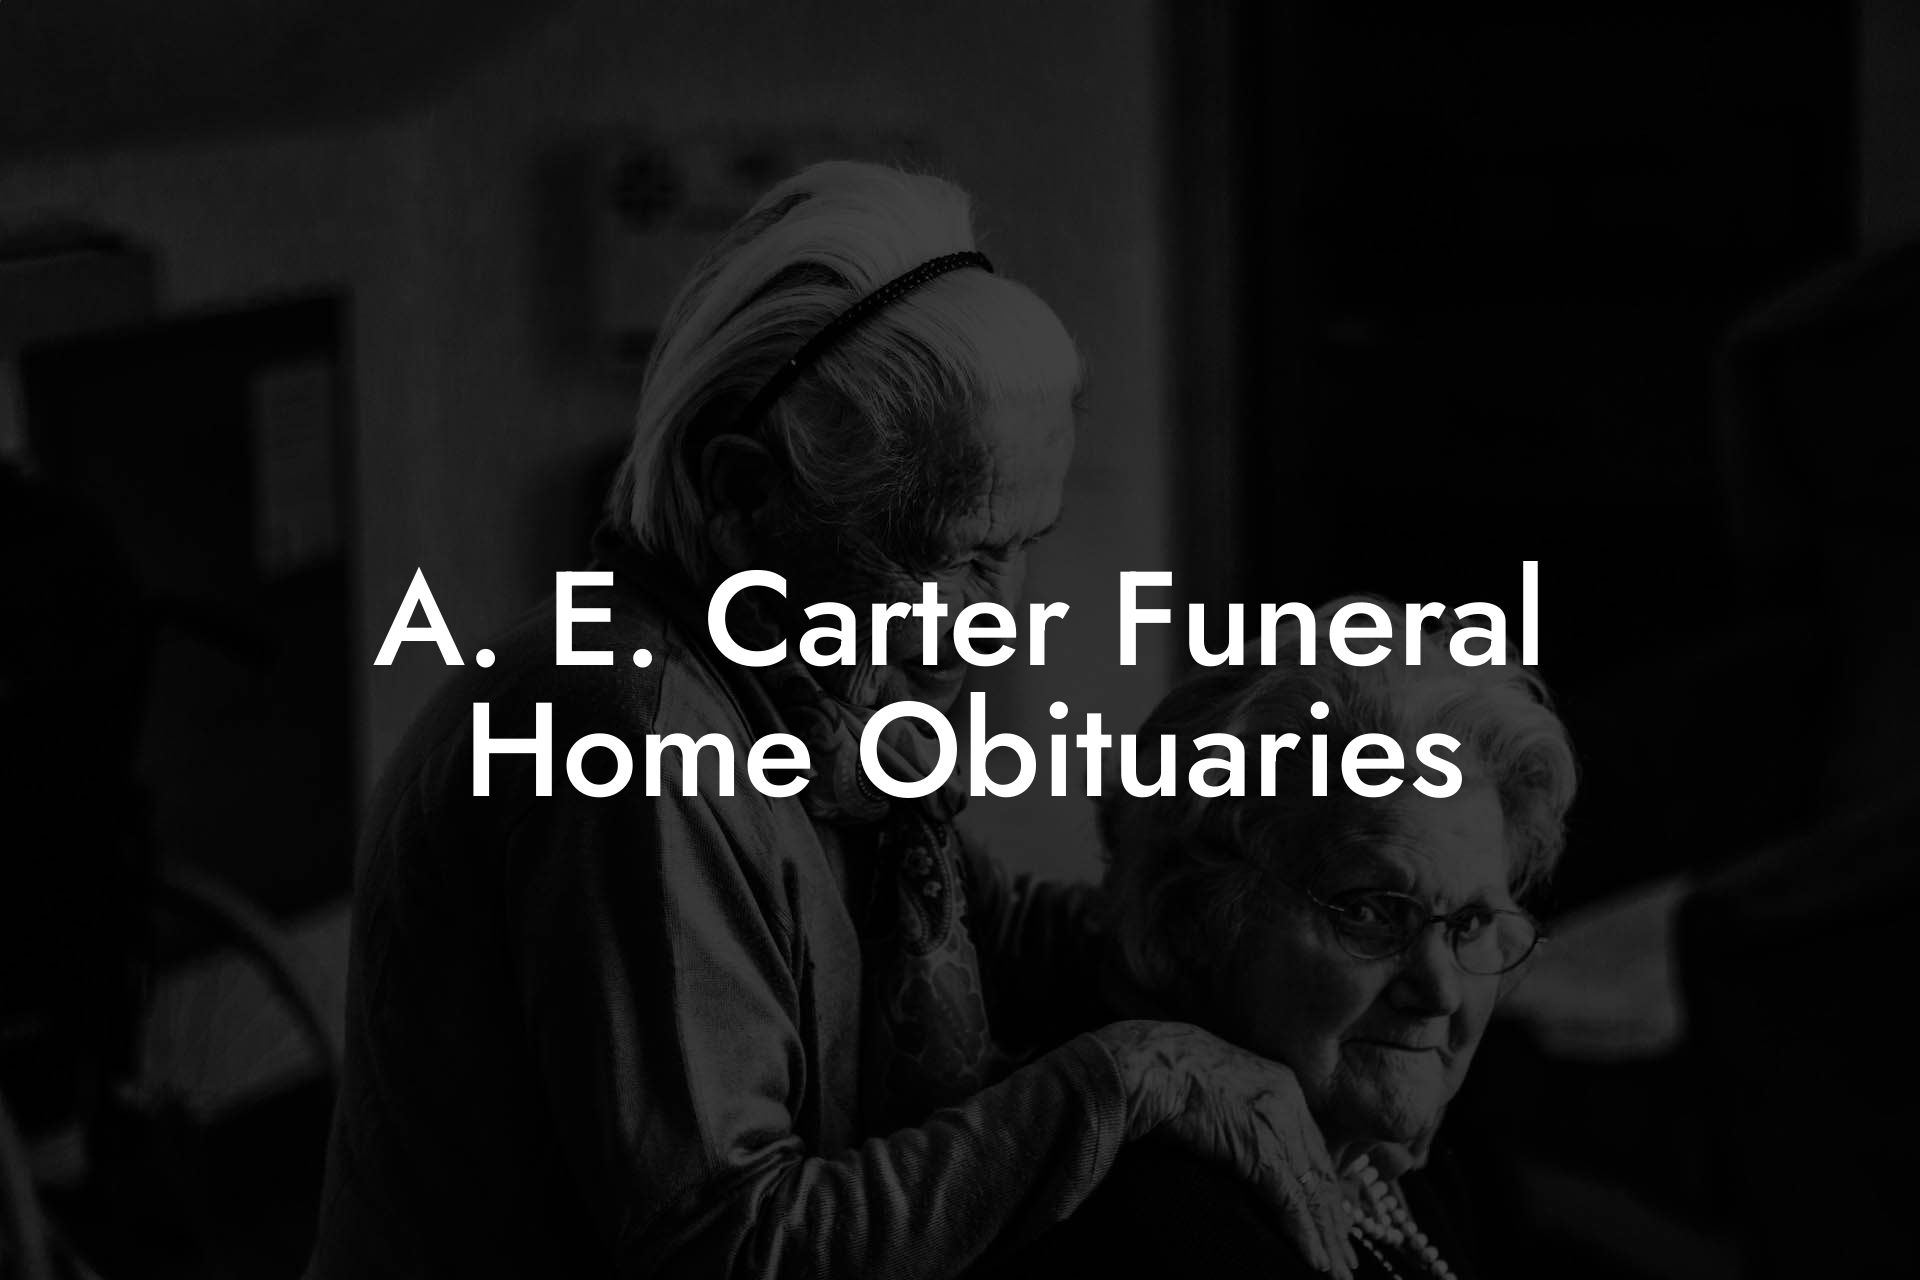 A. E. Carter Funeral Home Obituaries